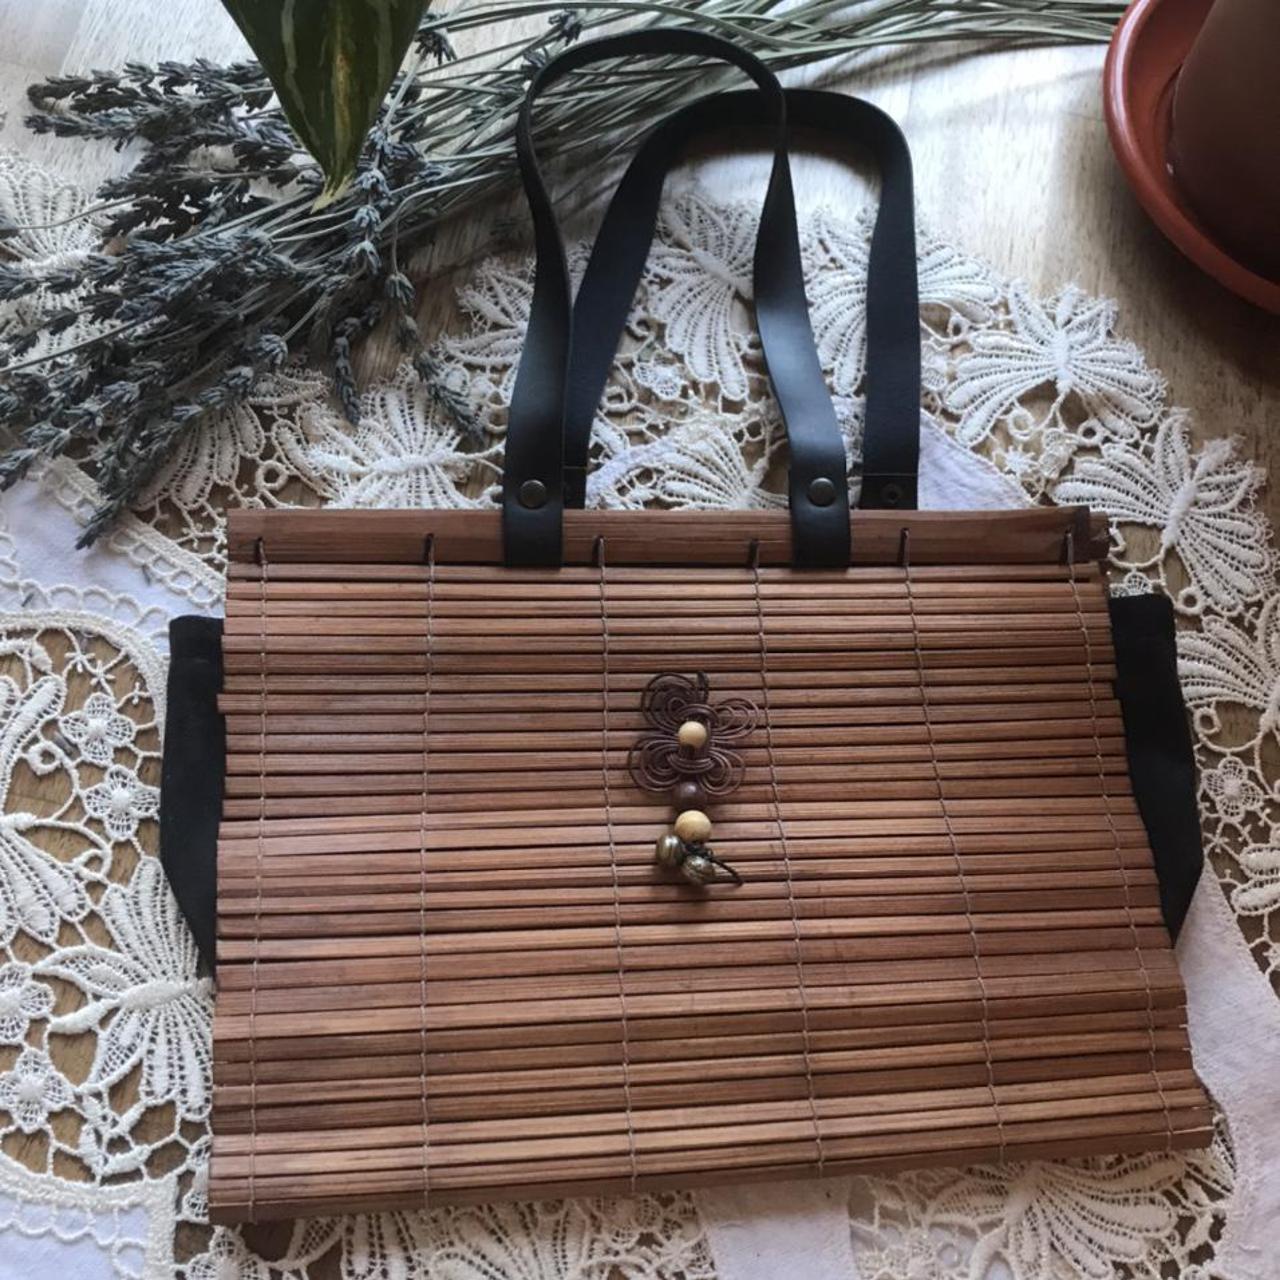 Product Image 1 - Wicker vintage brown Handbag with